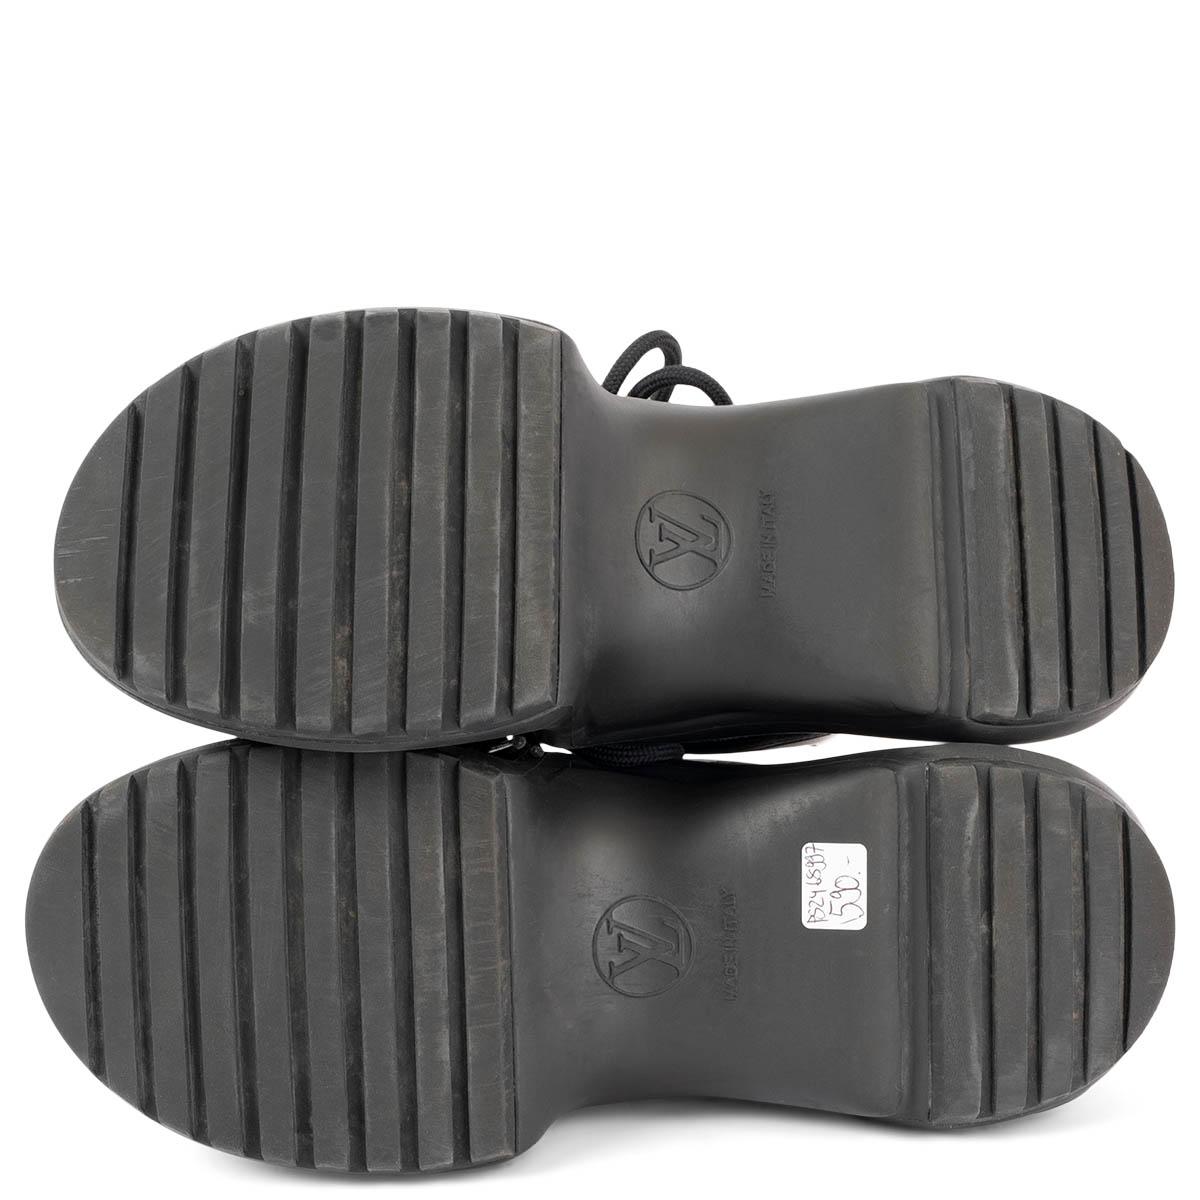 LOUIS VUITTON black & white leather & mesh ARCHLIGHT Shoes 36 For Sale 5